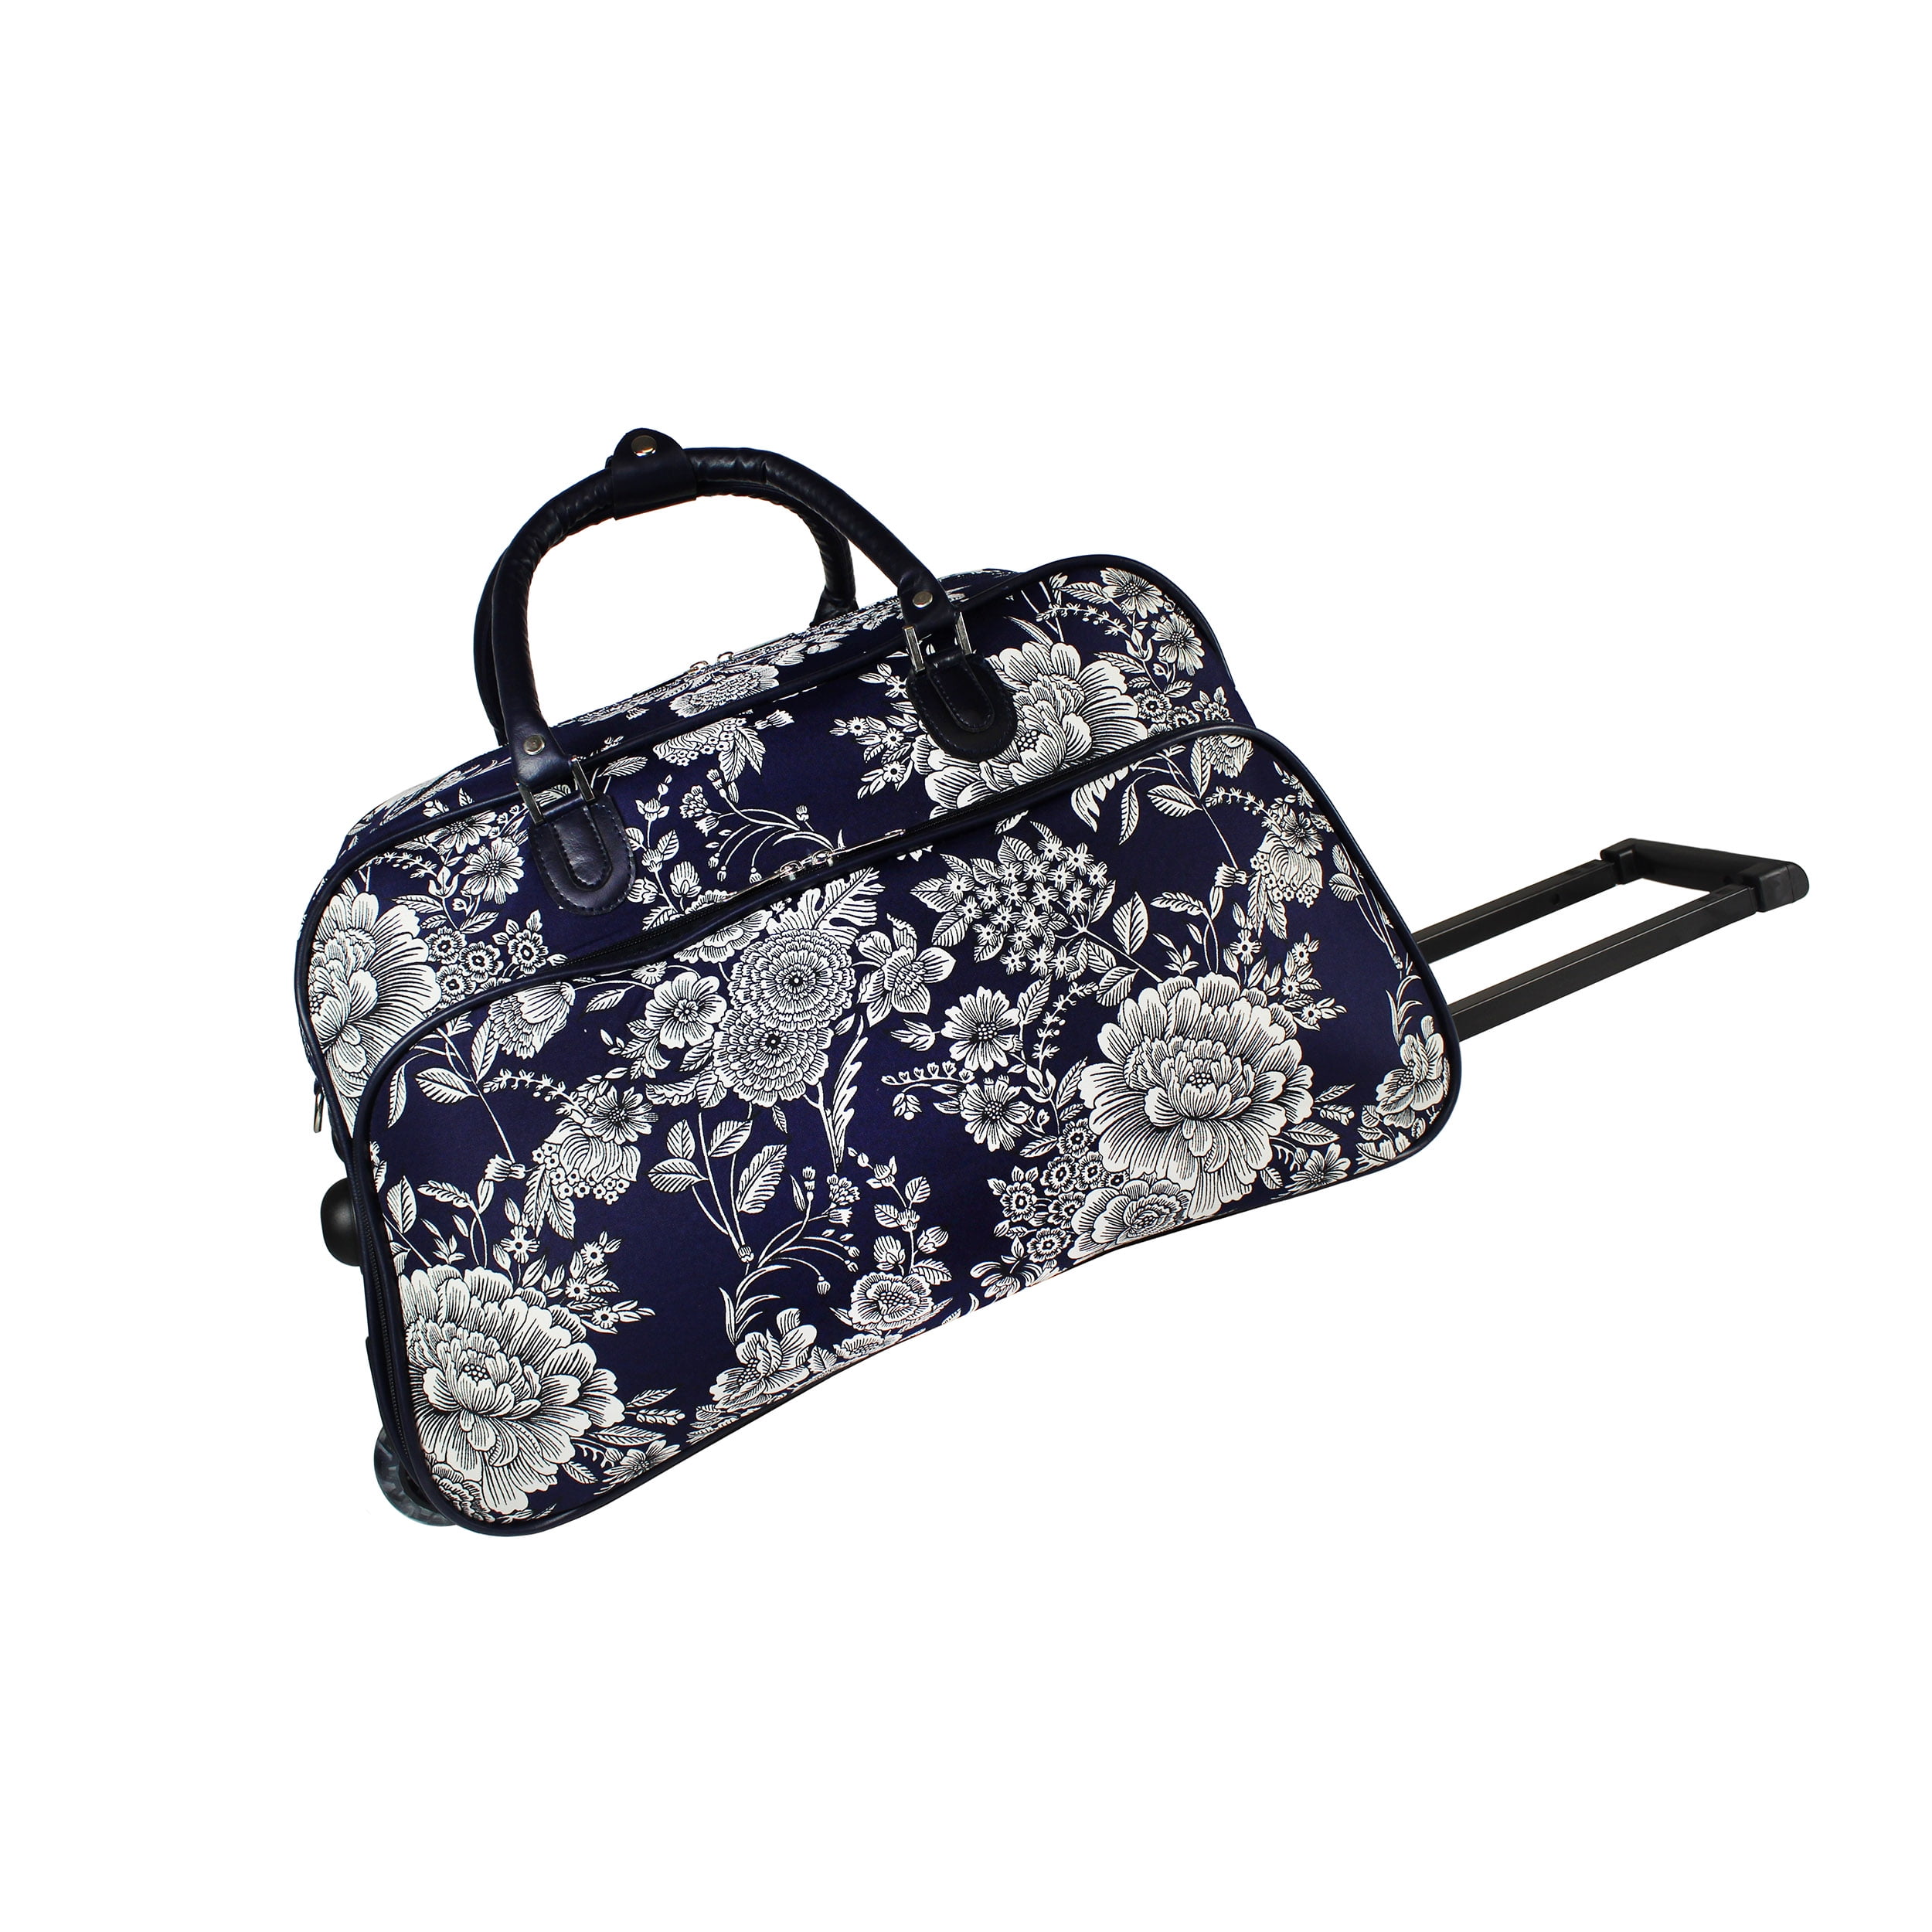 World Traveler 21-Inch Carry-On Rolling Duffel Bag - Navy White Flowers